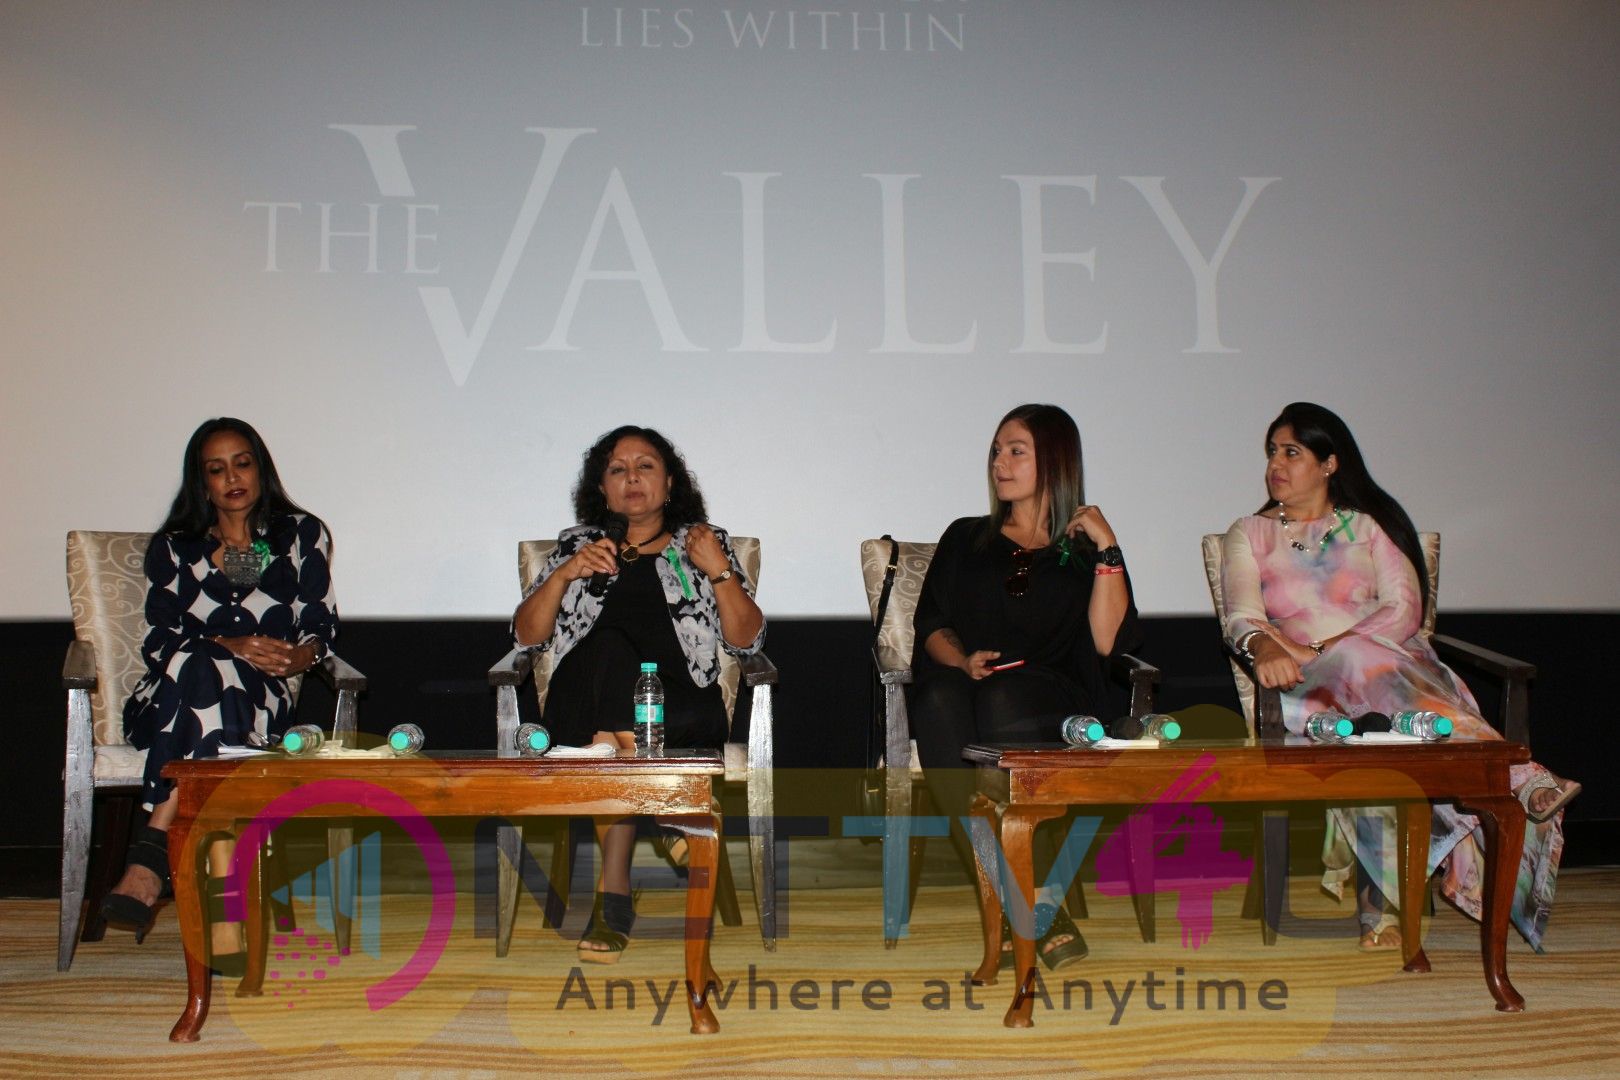 Pooja Bhatt & Suchitra Pillai Talk About Film The Valley Pics Hindi Gallery